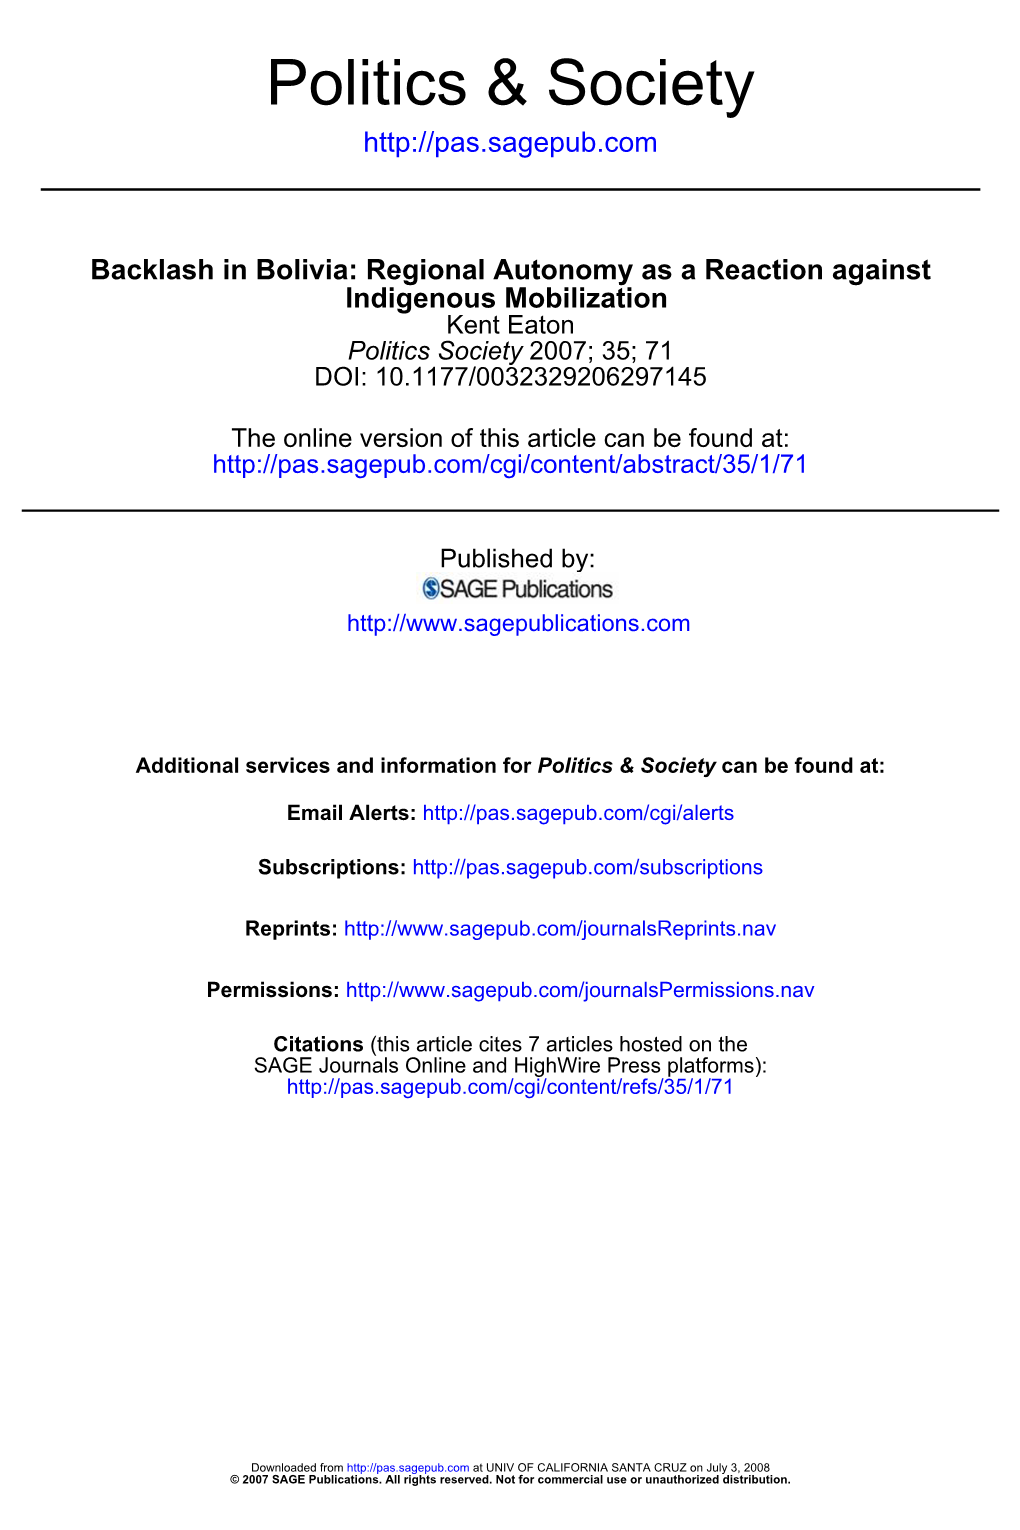 Backlash in Bolivia: Regional Autonomy As a Reaction Against Indigenous Mobilization Kent Eaton Politics Society 2007; 35; 71 DOI: 10.1177/0032329206297145